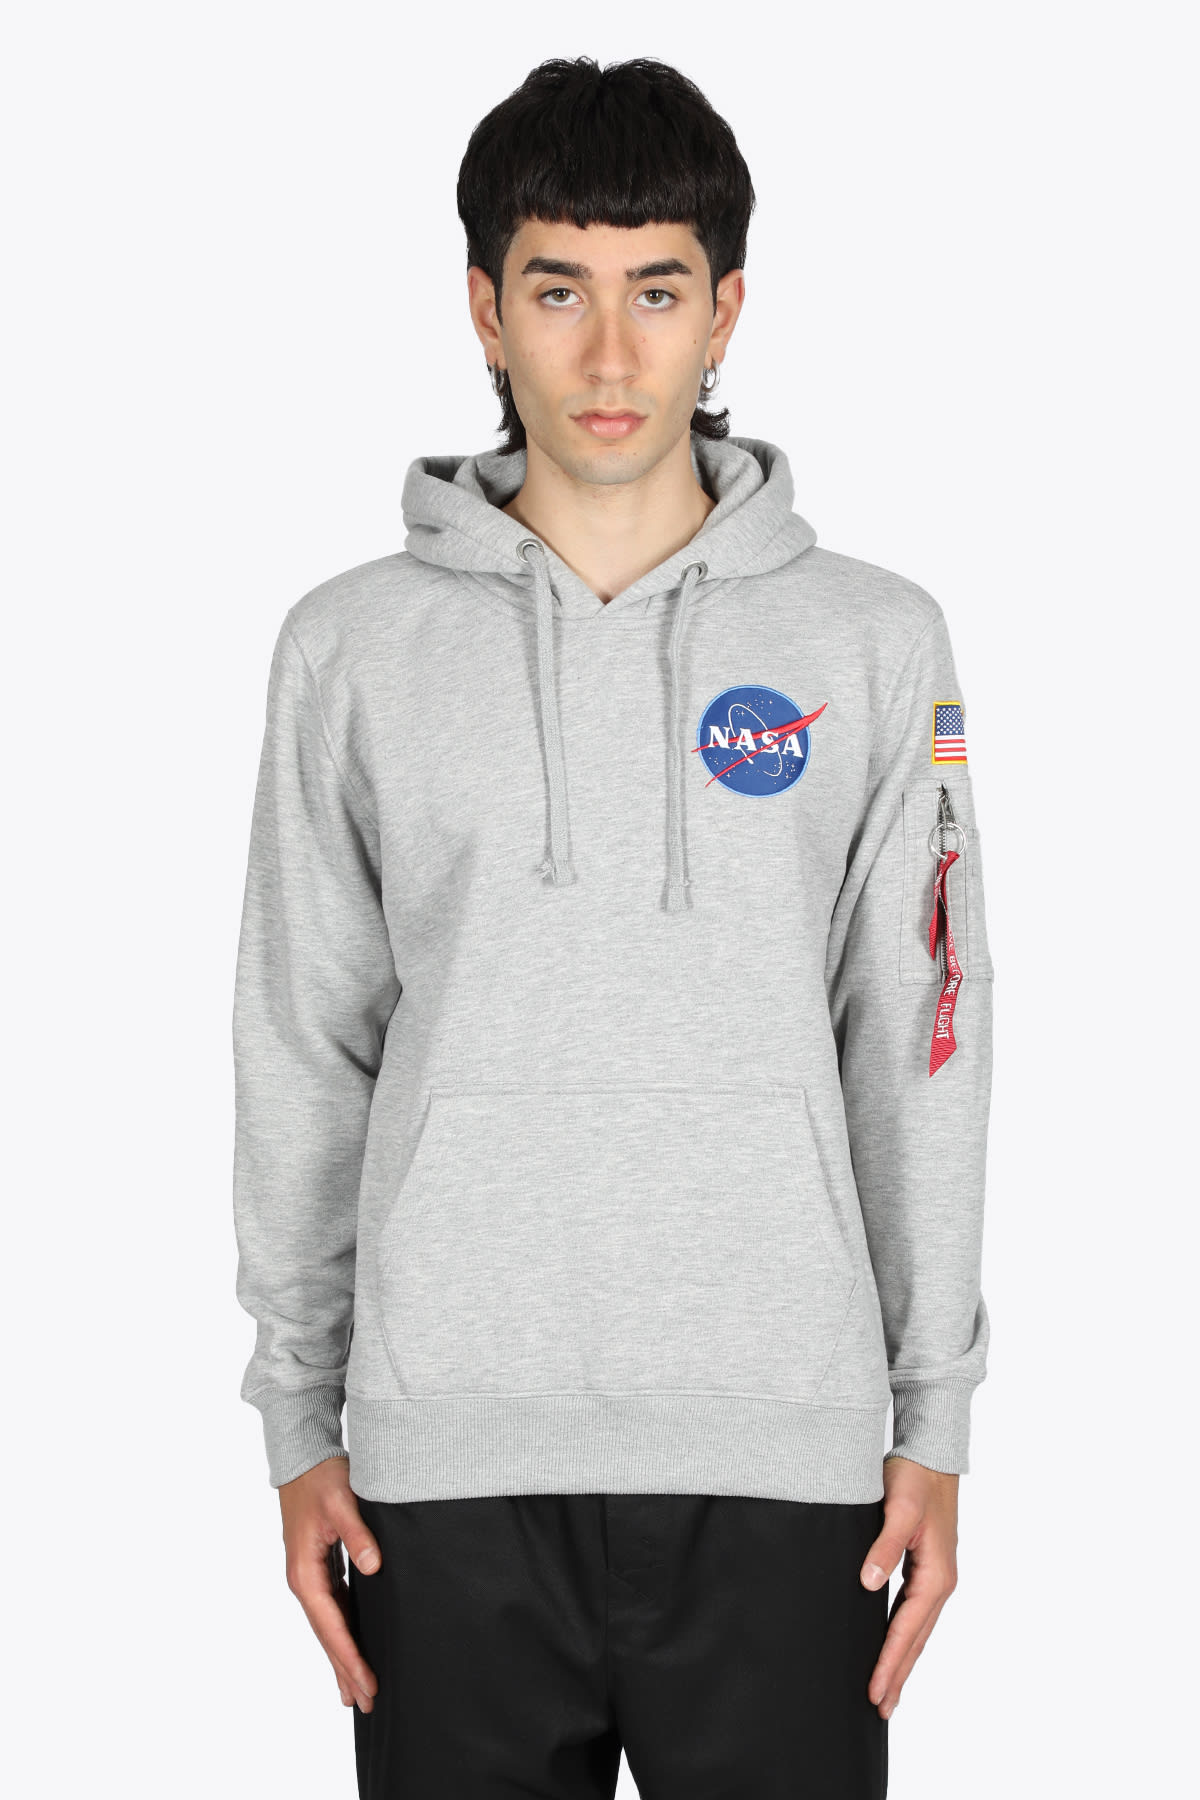 Alpha Industries Space Shuttle Hoody Grey cotton space shuttle hoodie